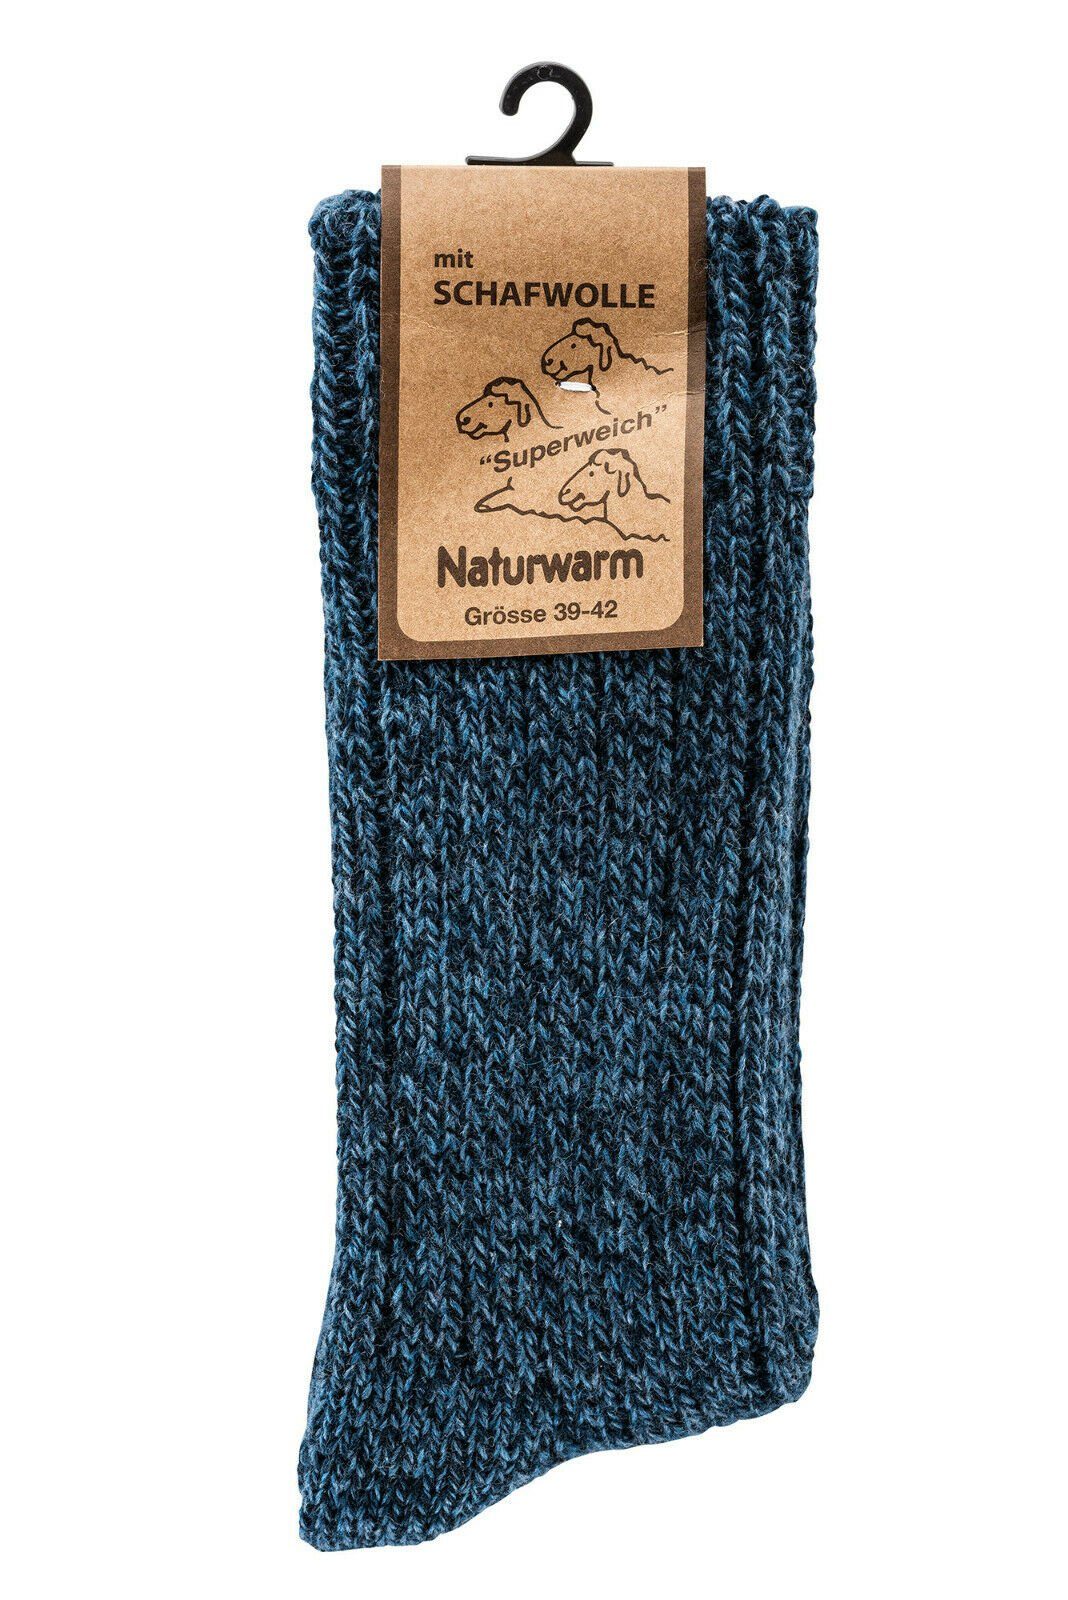 Norwegersocken (3 Paar) Baumwolle Viskose Socken weiche Warme Wowerat mit Norweger Wolle